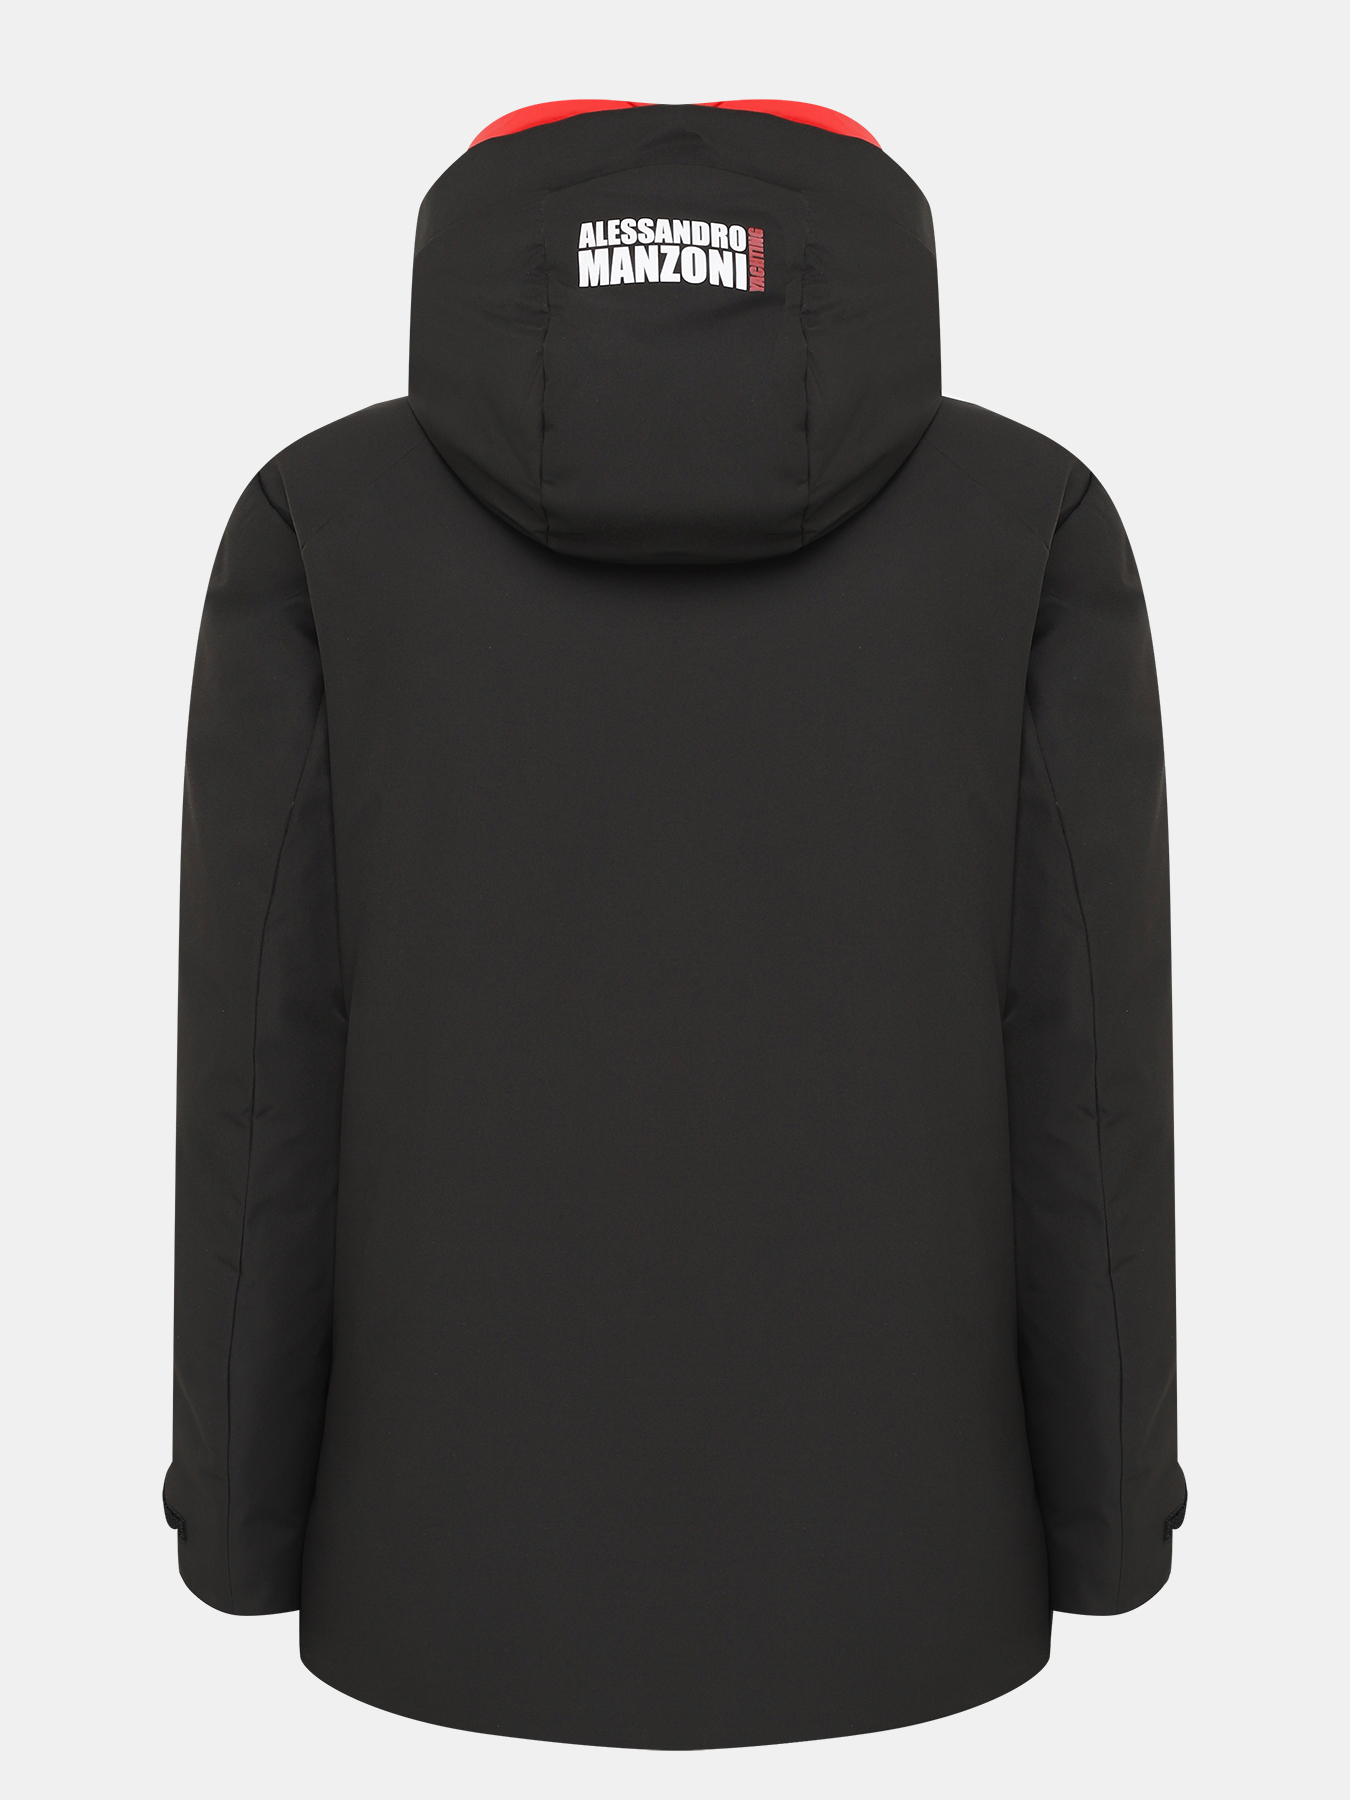 Зимняя куртка Alessandro Manzoni Yachting 382195-030, цвет черный, размер 58 - фото 6